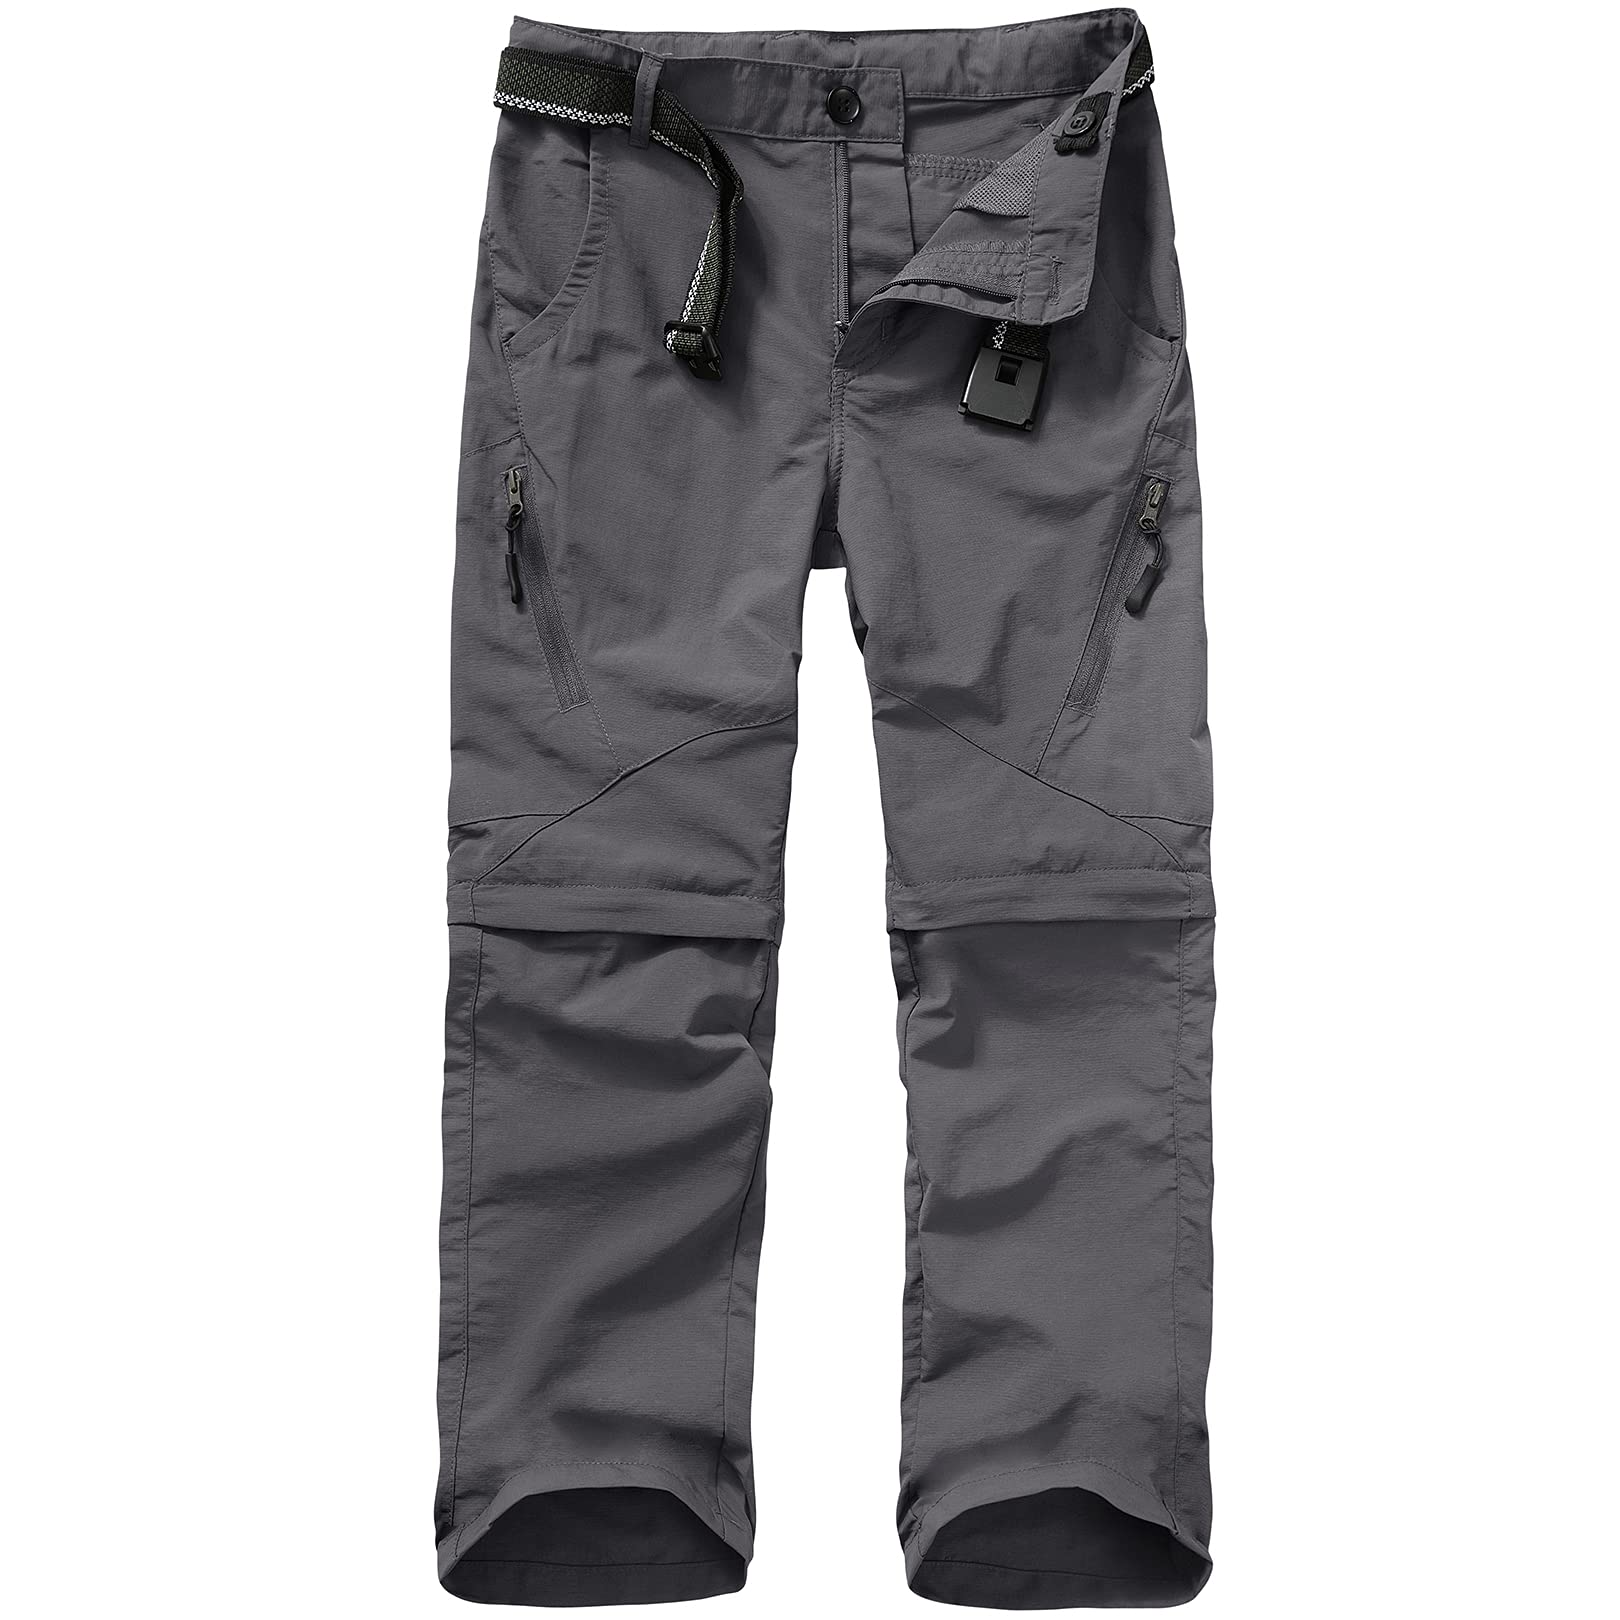 Asfixiado Boys Cargo Pants, Kids' Casual Outdoor Quick Dry Waterproof  Hiking Climbing Convertible Trousers 9035 #Grey